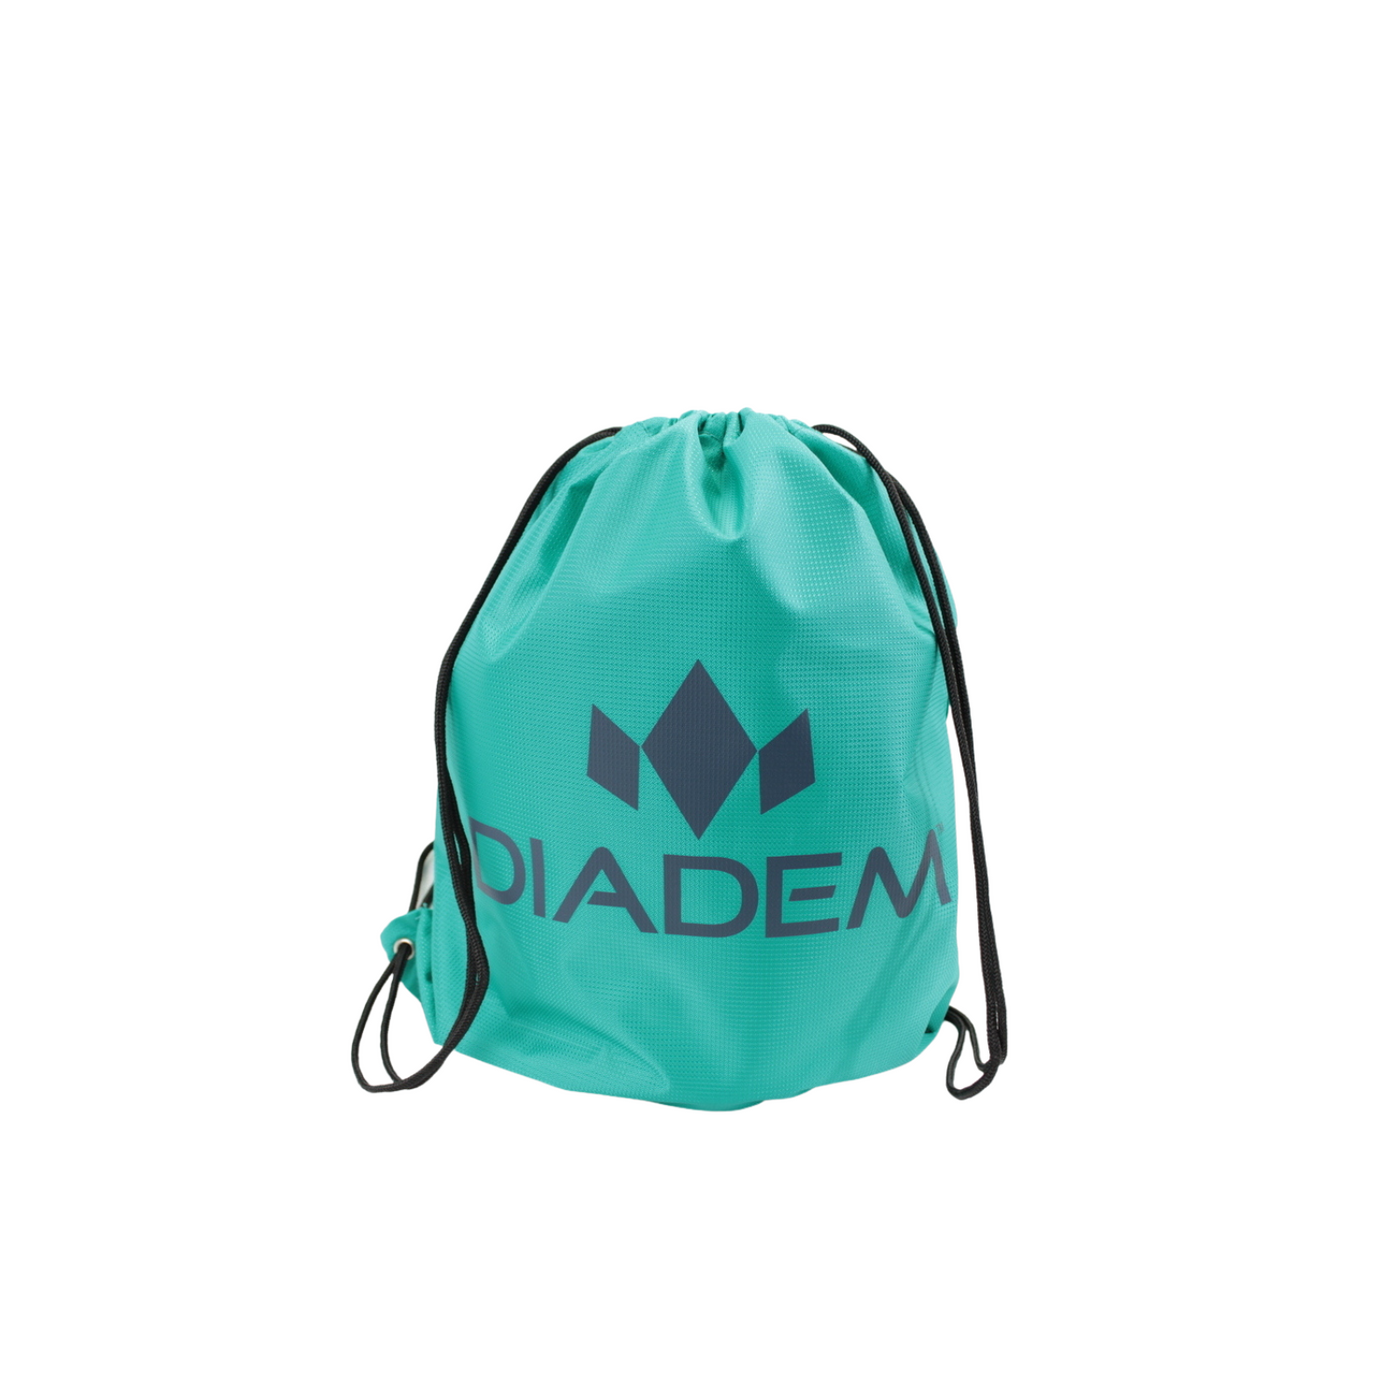 Diadem Sports Diadem Draw String Bag, Teal